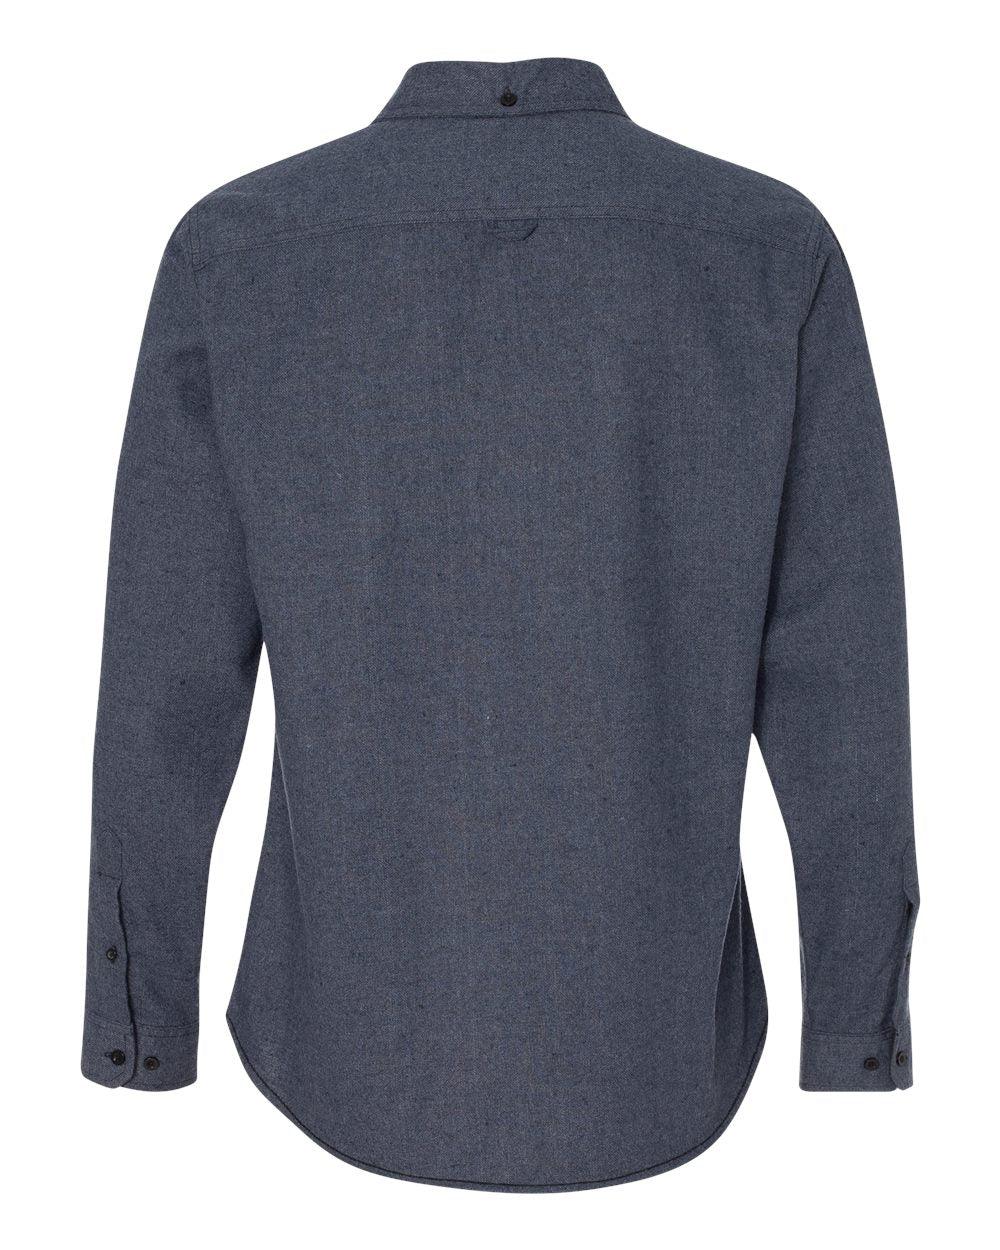 Long Sleeve Flannel Shirt - Burnside 8200 - Leatherwood Trading Post